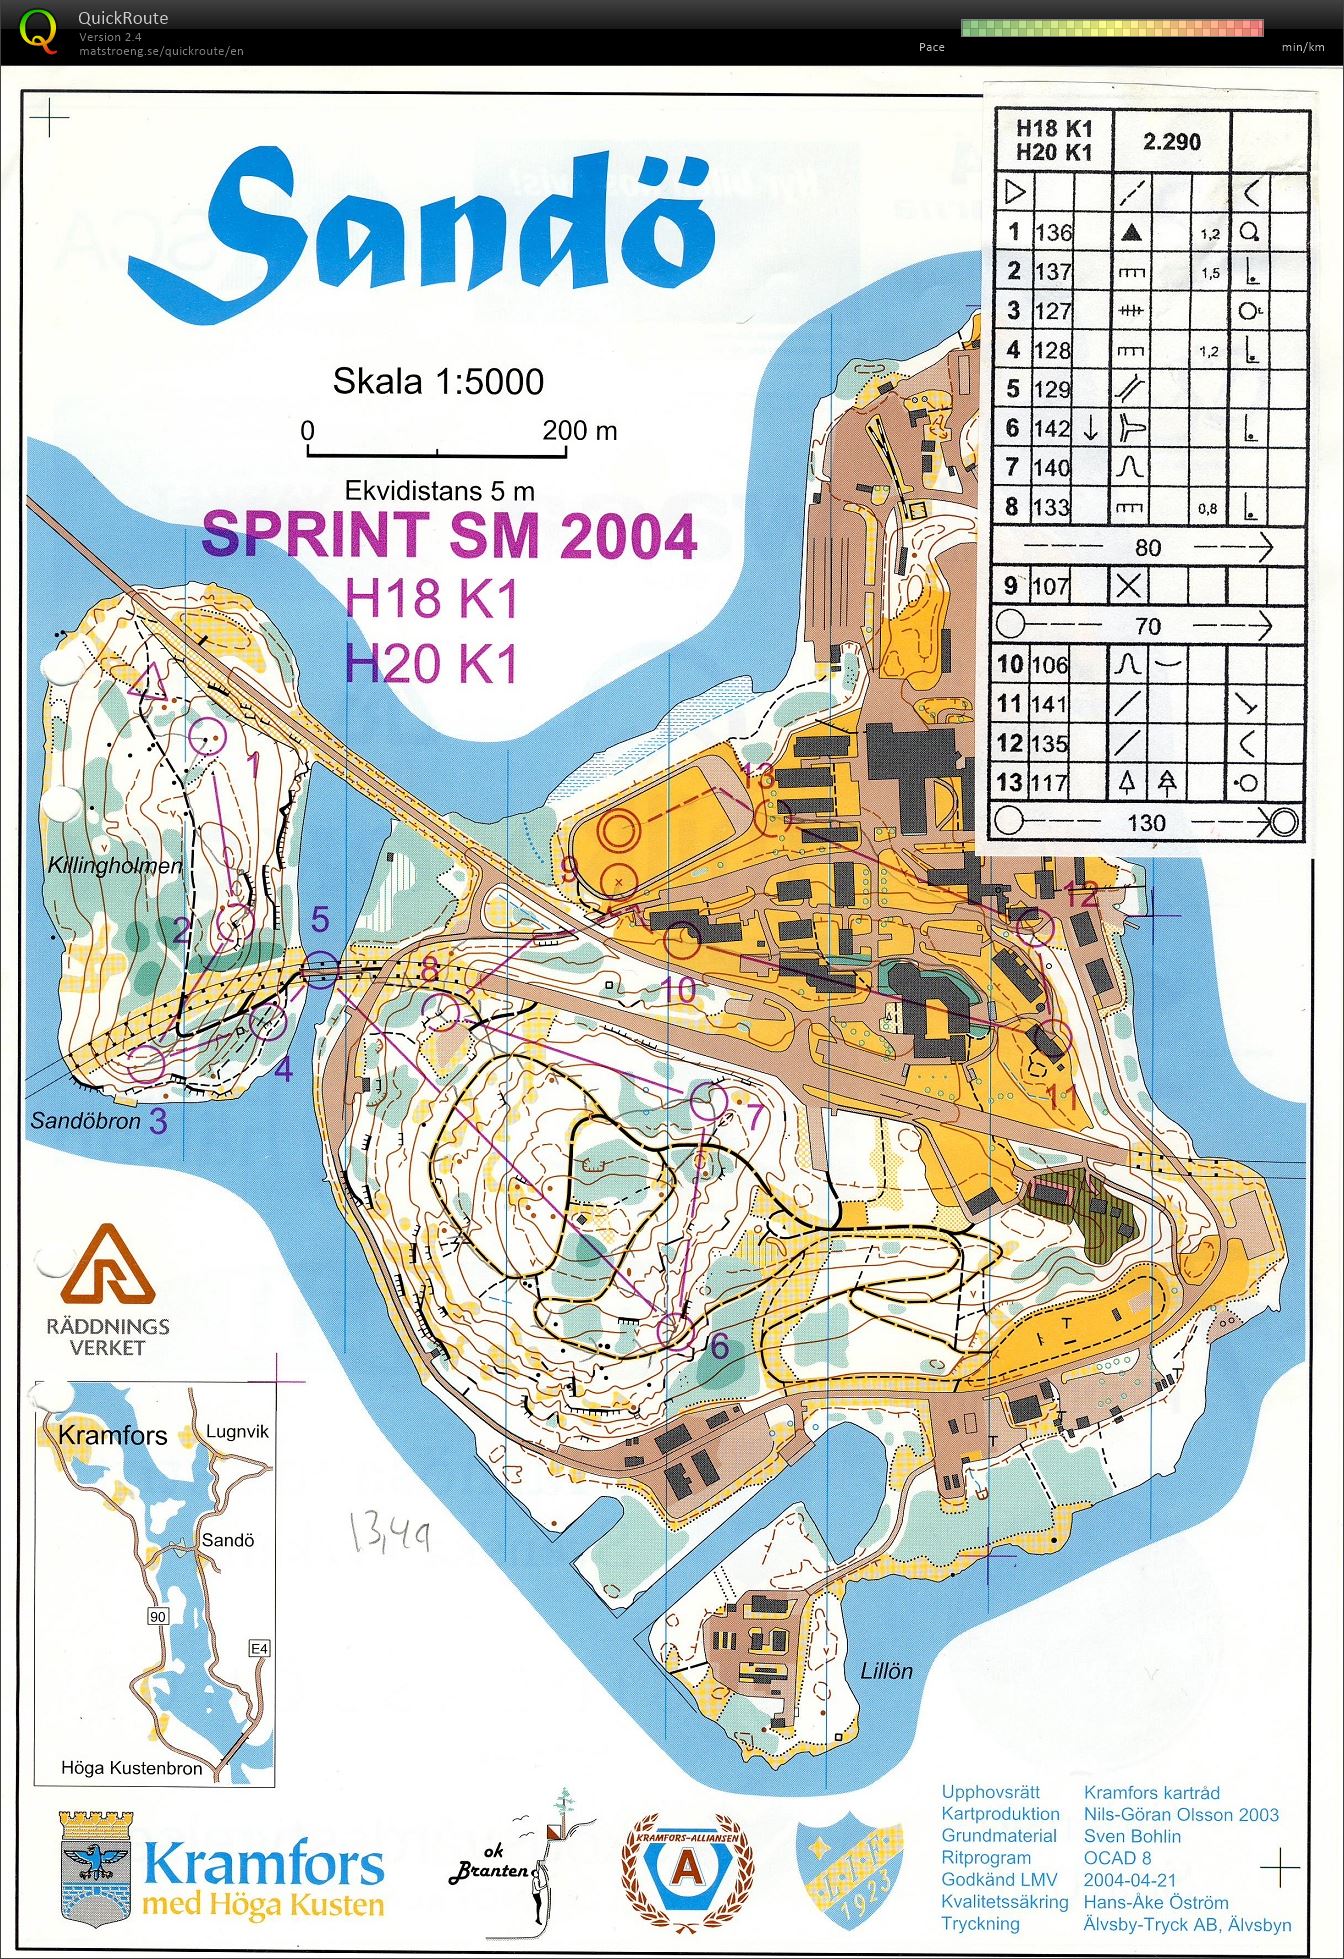 Sprint-SM, kval (2004-05-29)